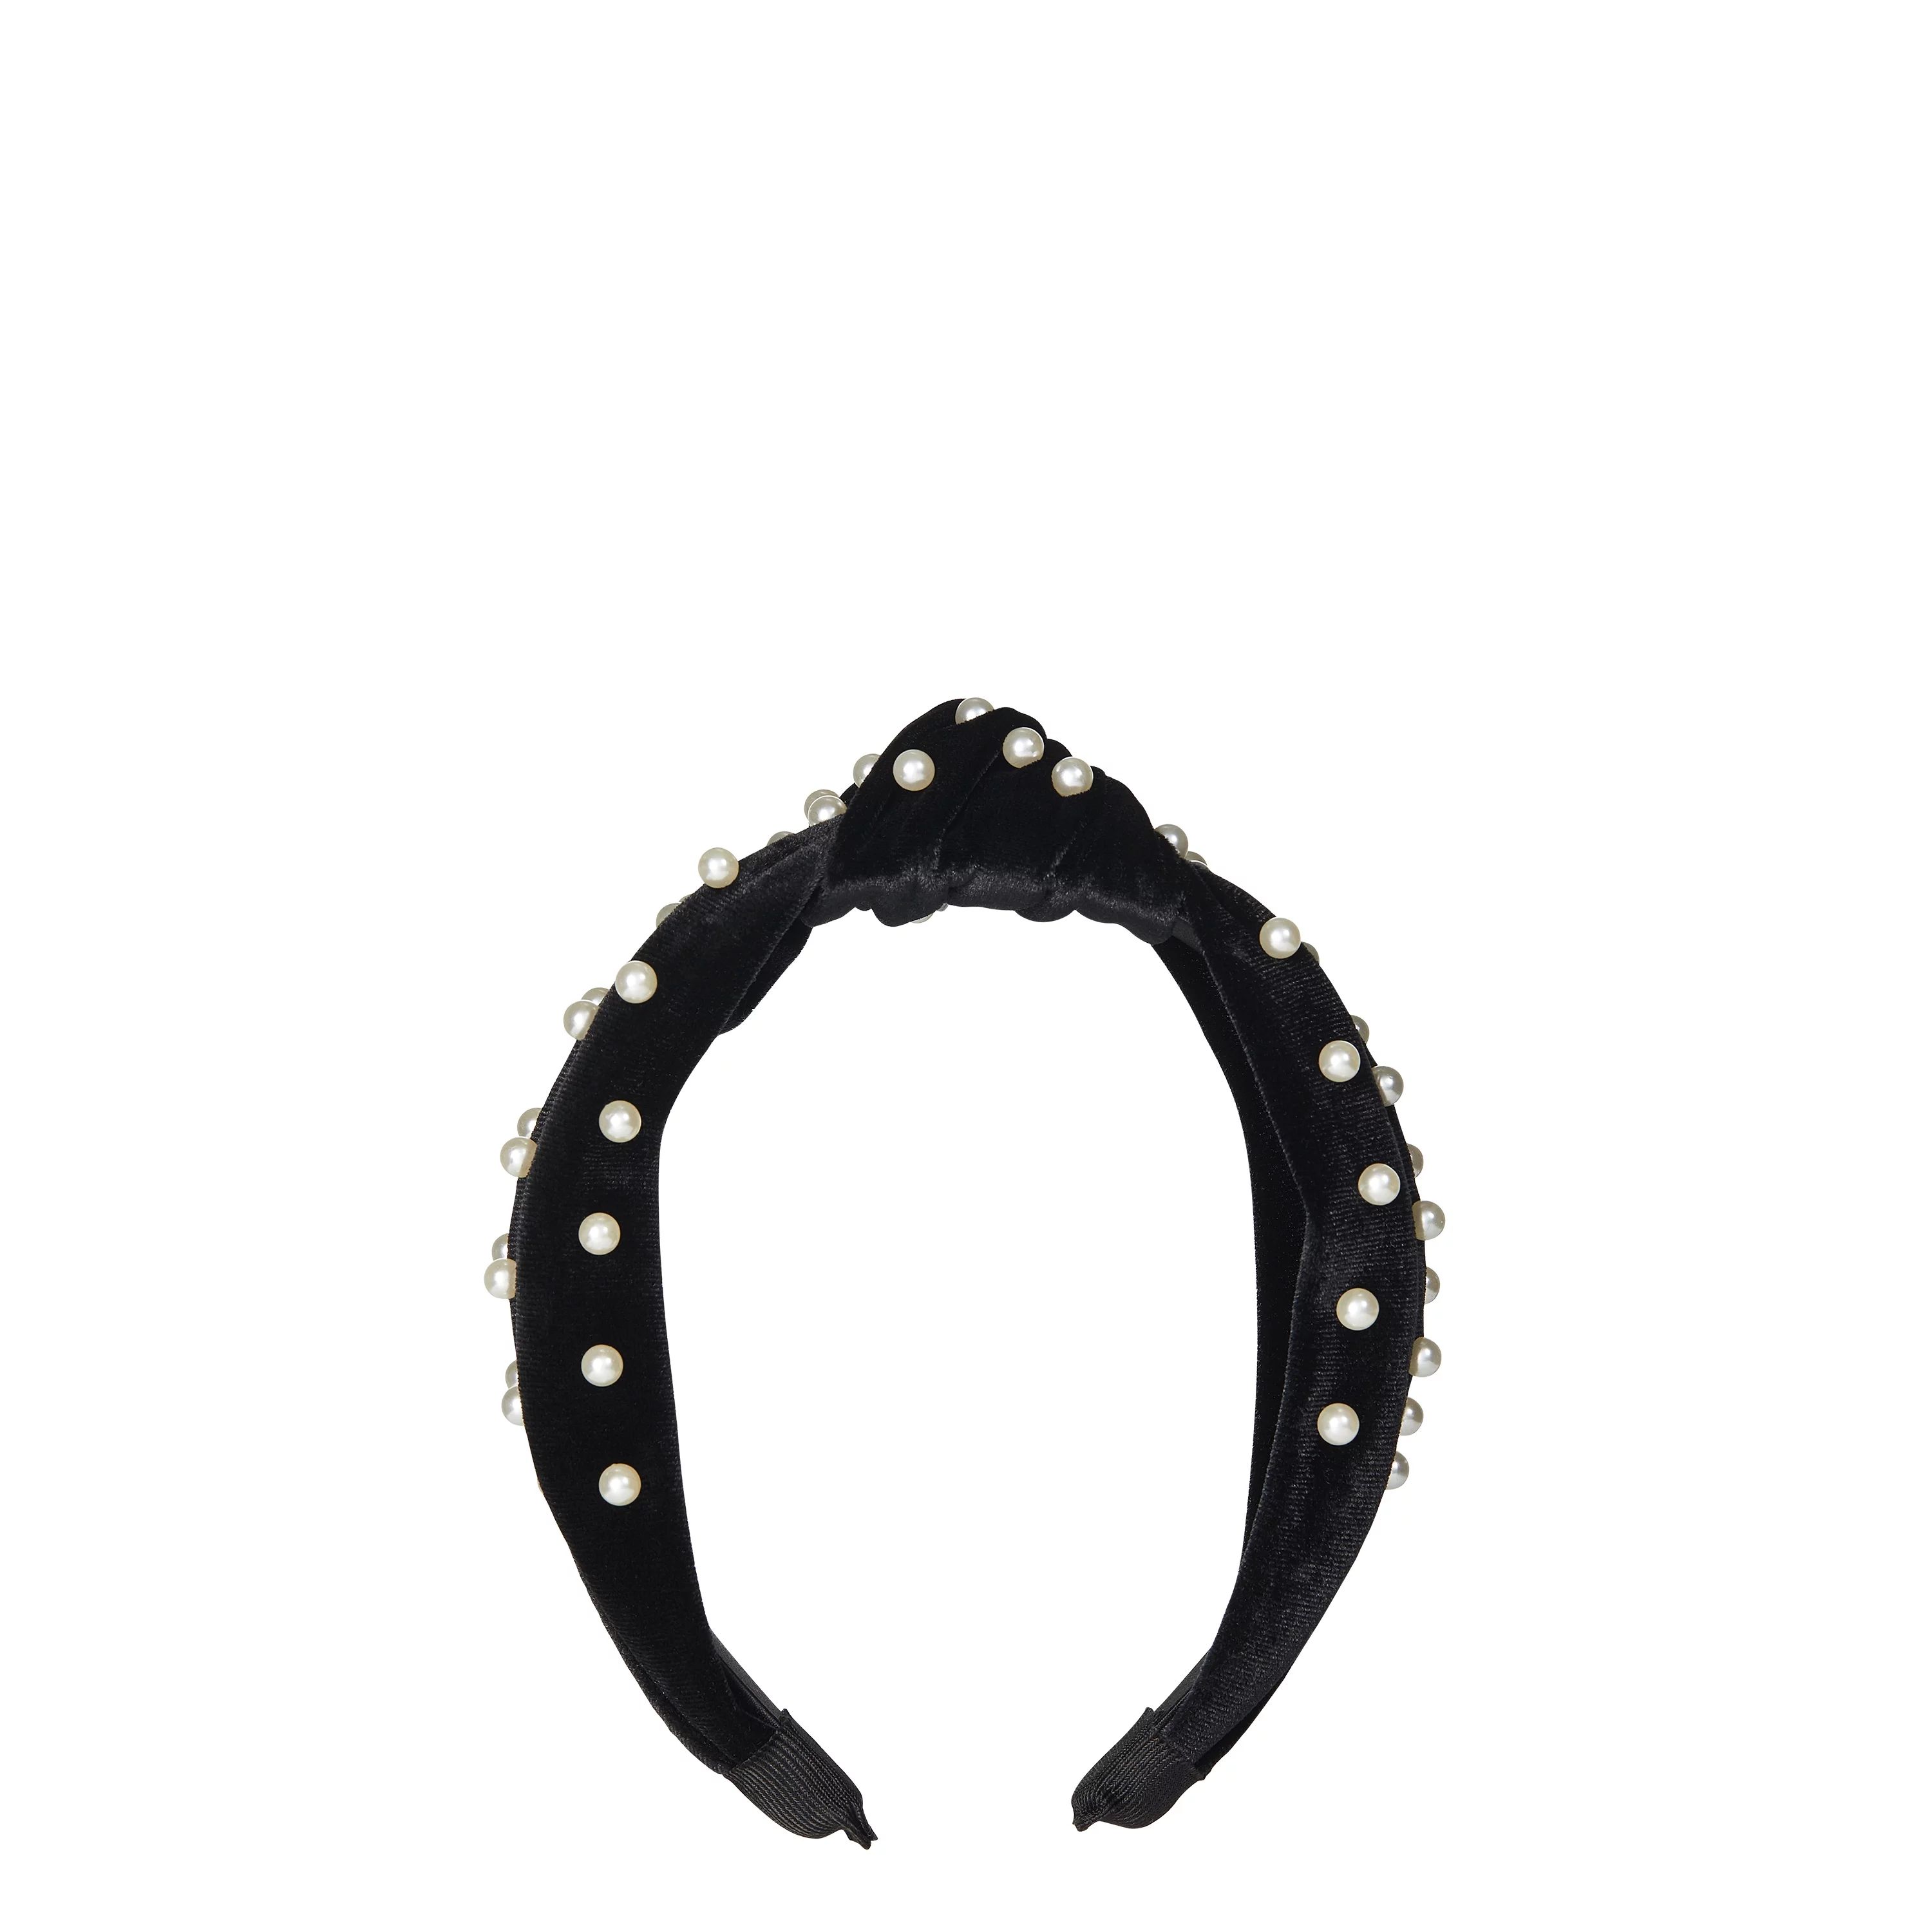 Hairitage Stylish Knotted Headband with Pearls Black, 1PC | Walmart (US)